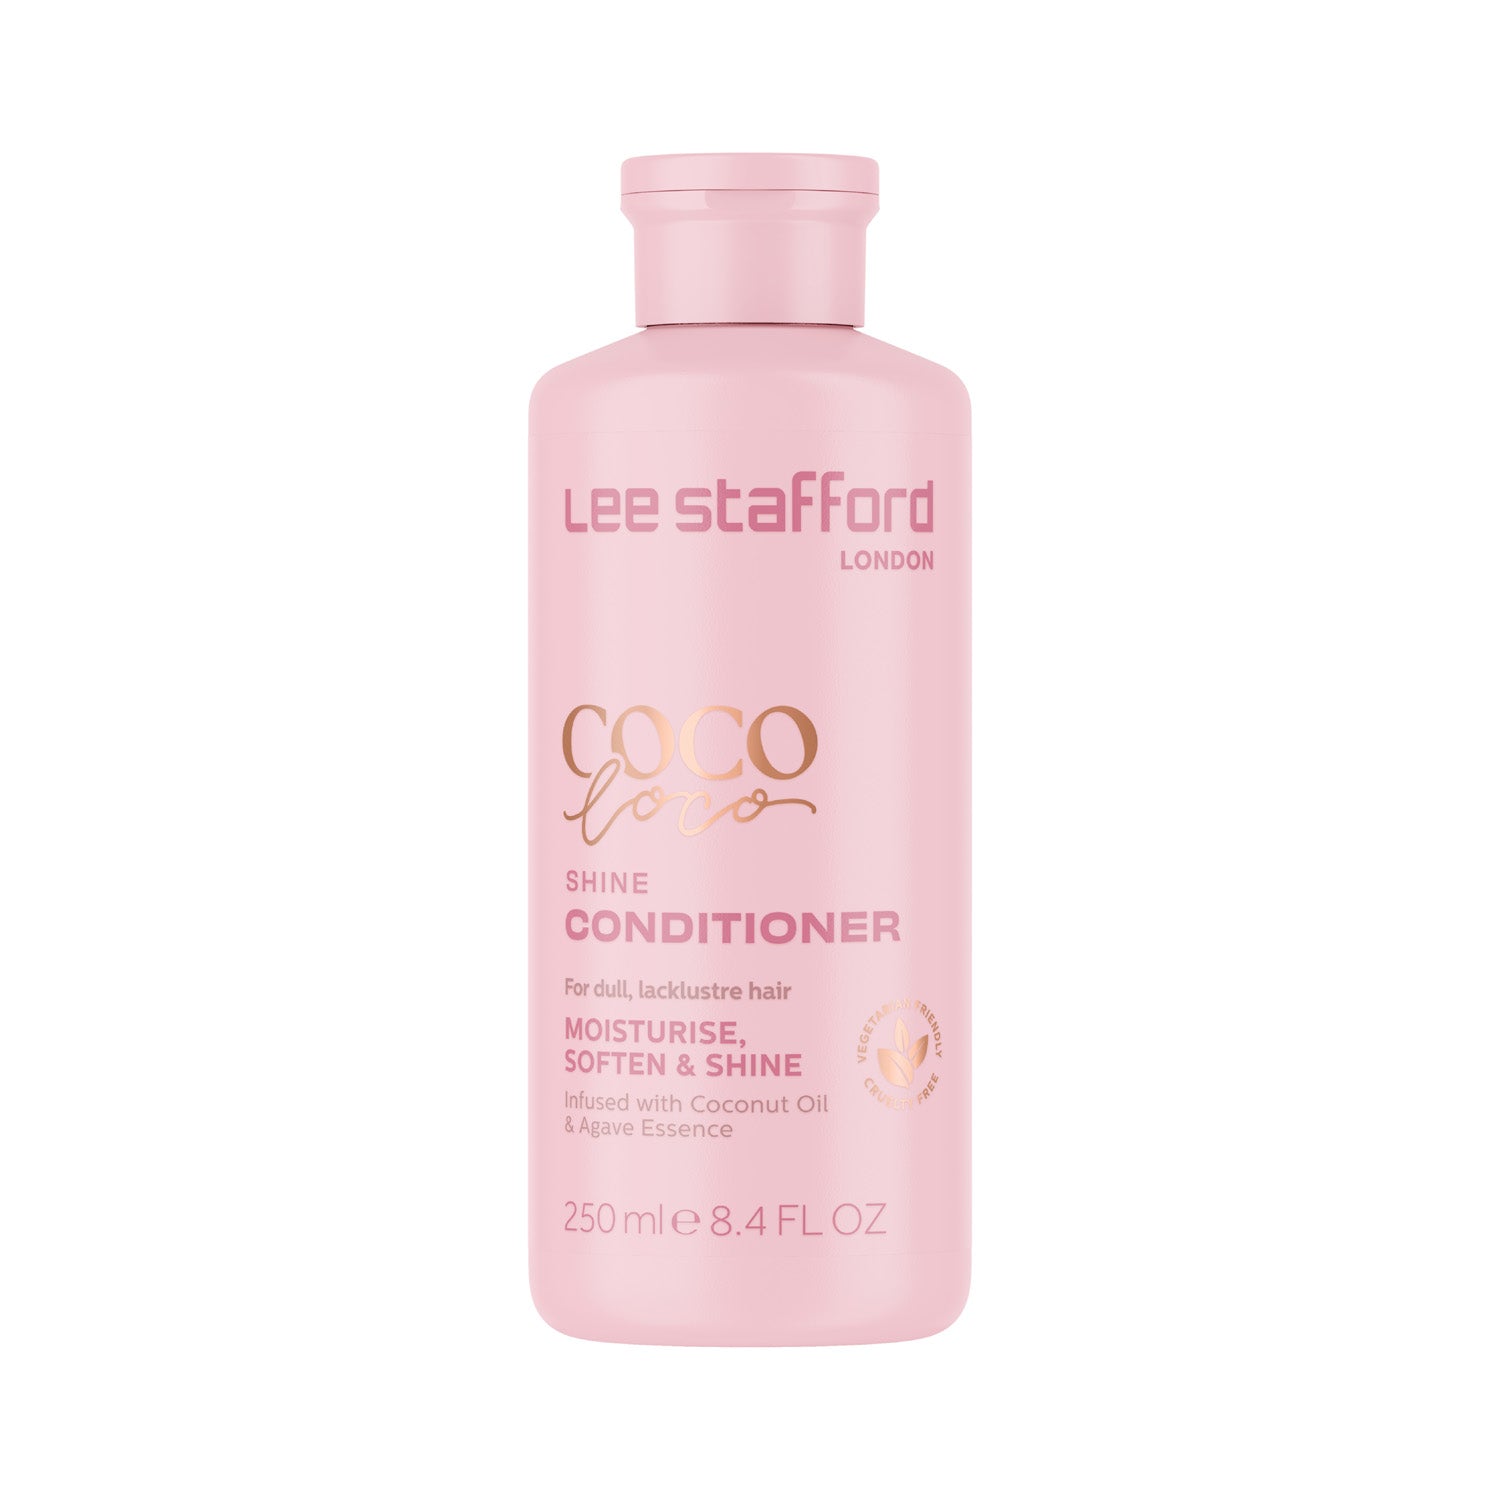 Coco Conditioner UK 250ml Stafford Agave – Stafford Lee & Lee Loco Shine